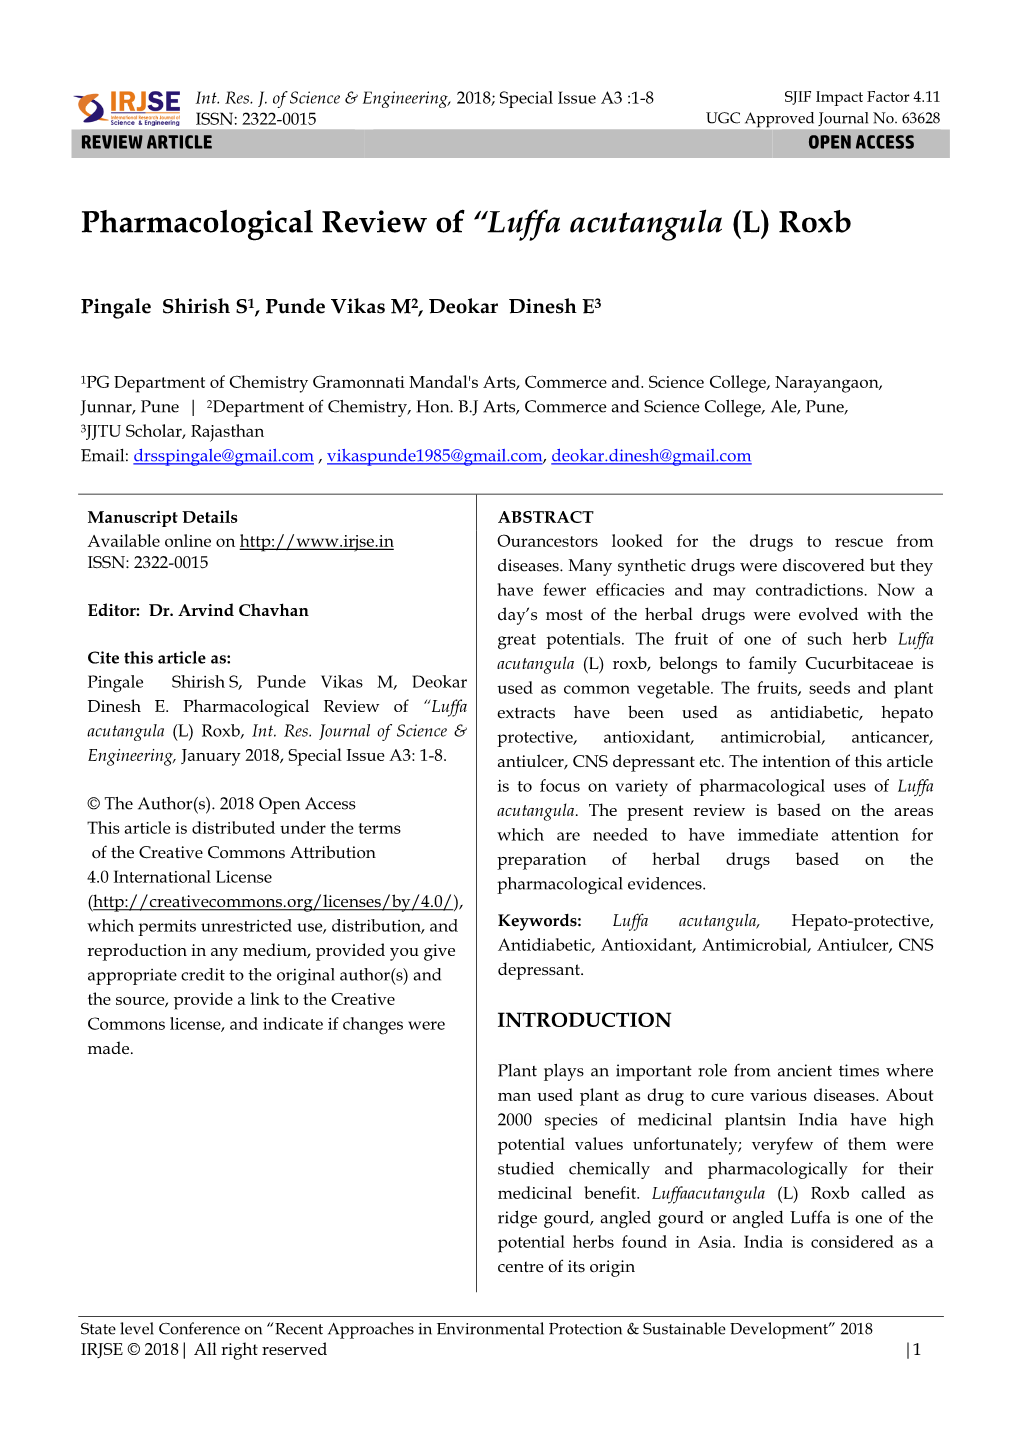 Pharmacological Review of “Luffa Acutangula (L) Roxb